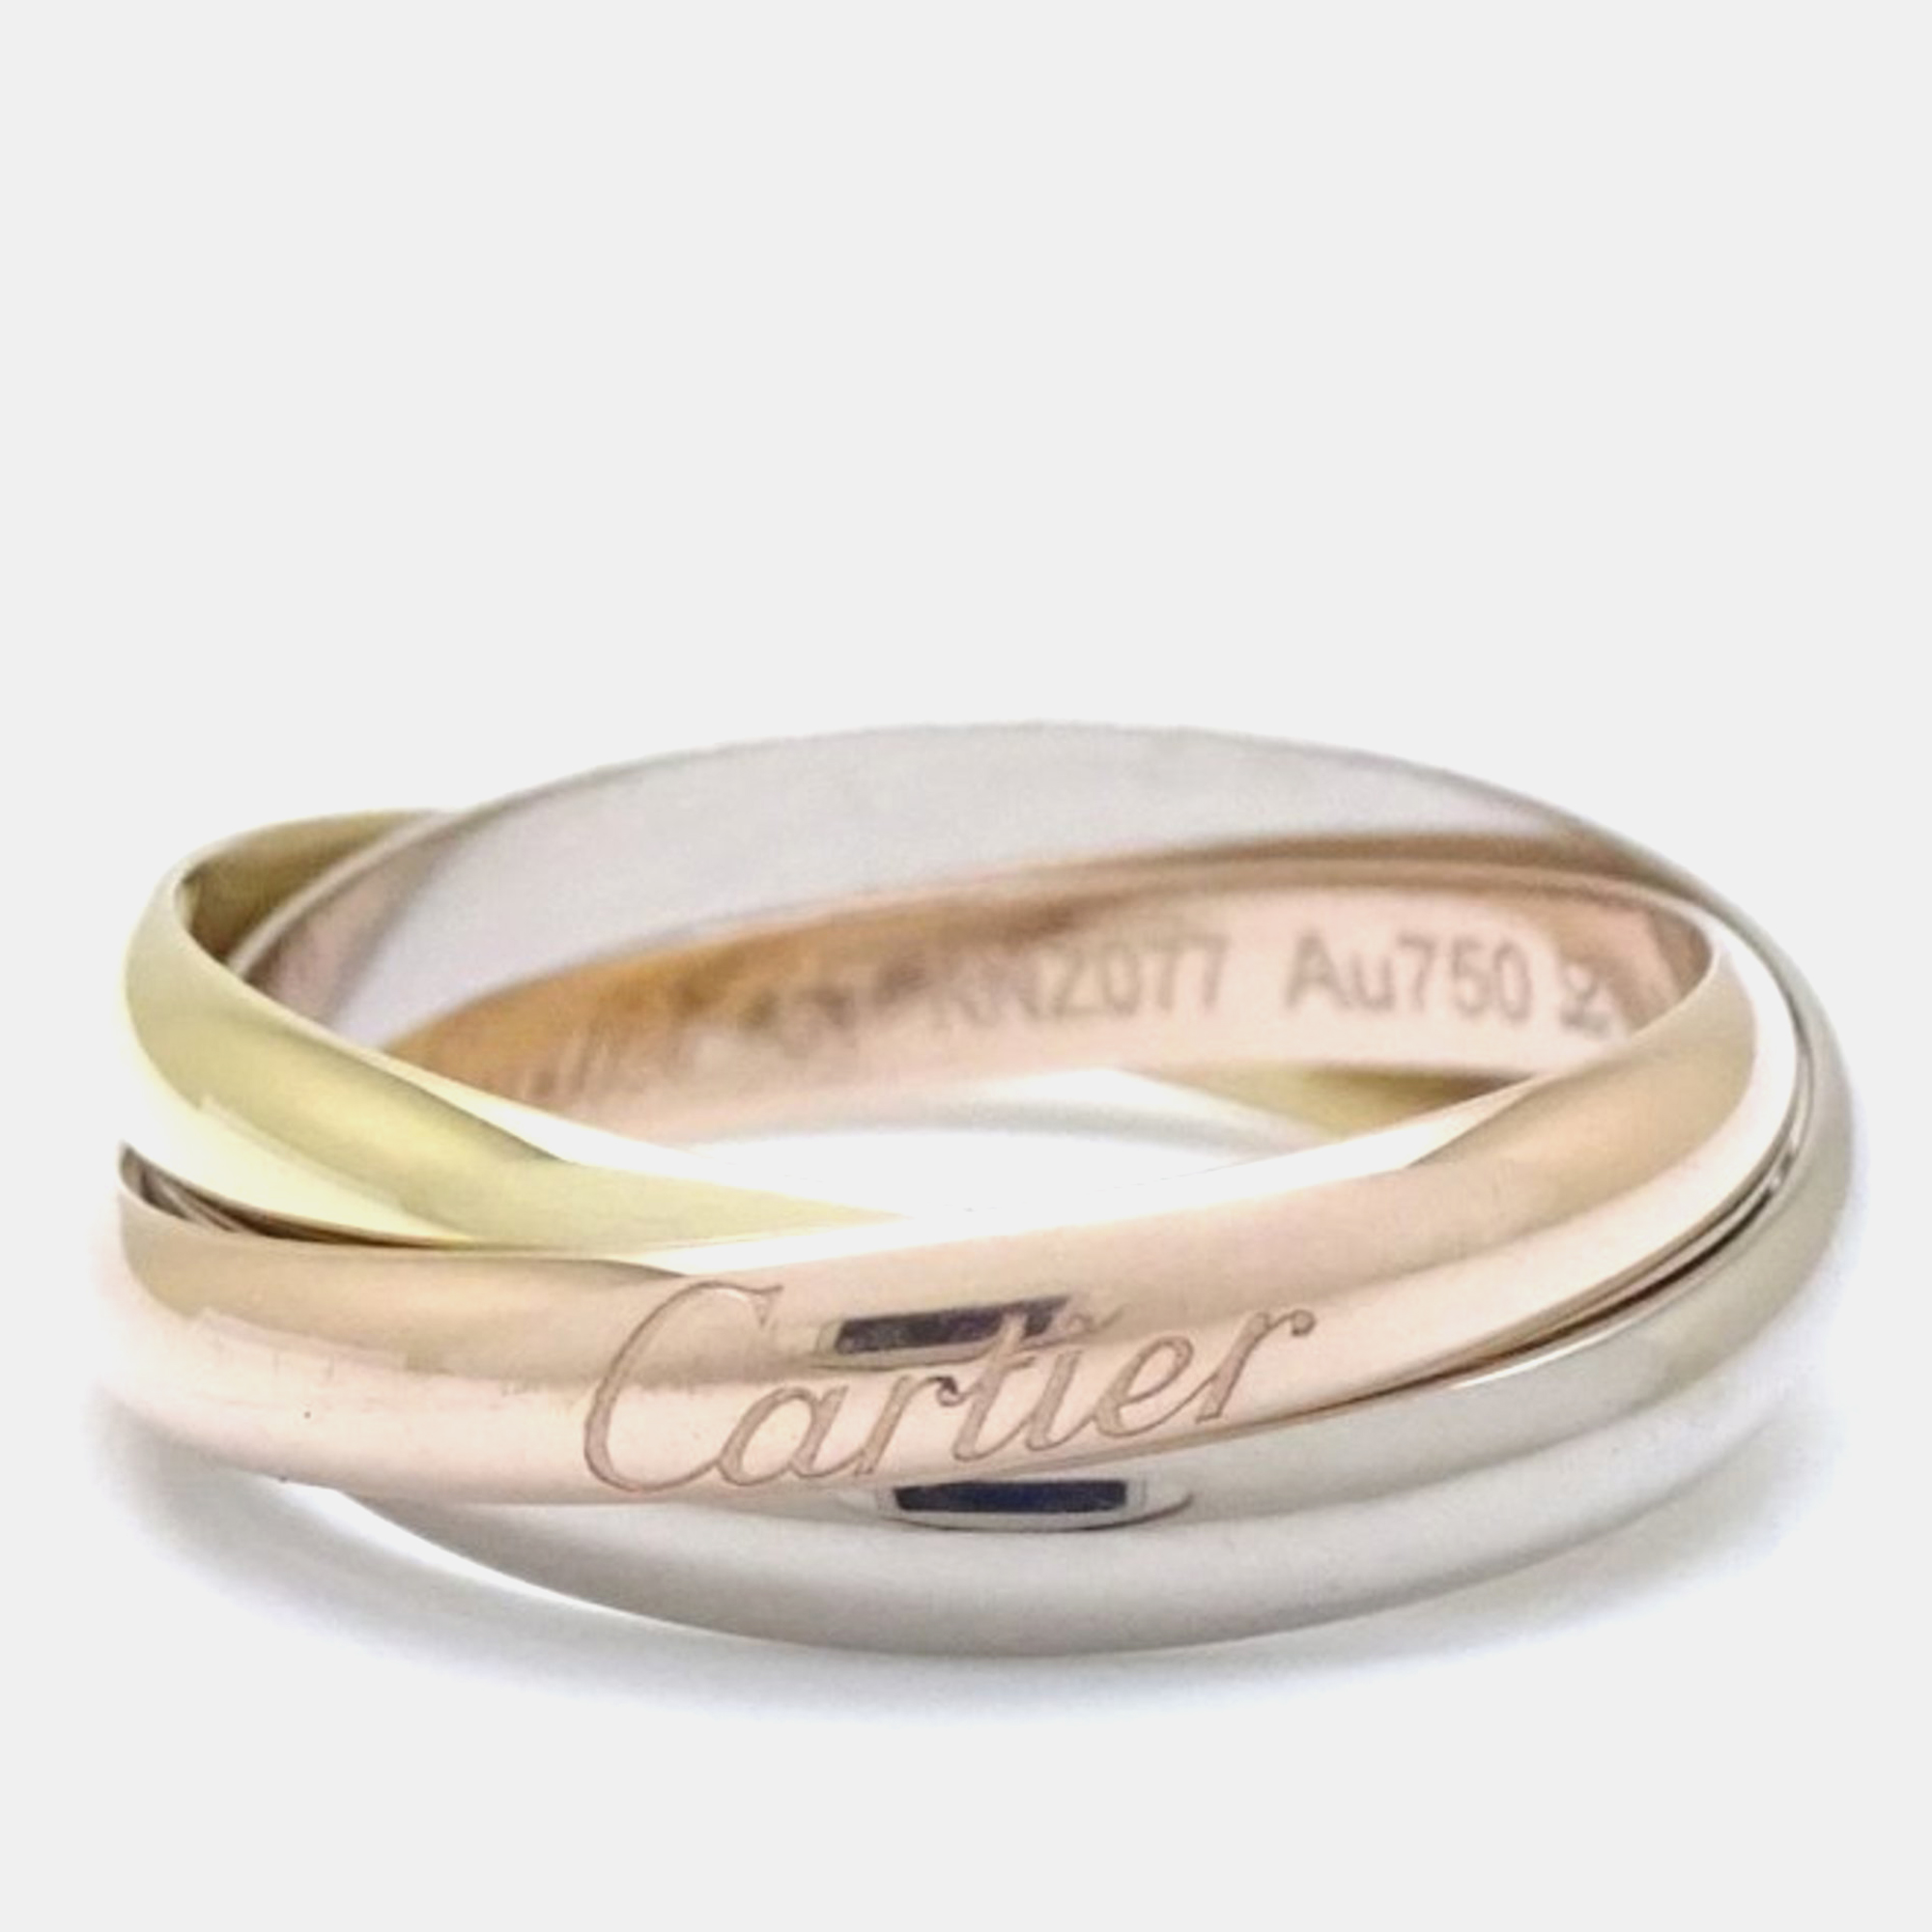 Cartier 18k yellow, rose, white gold trinity band ring eu 57